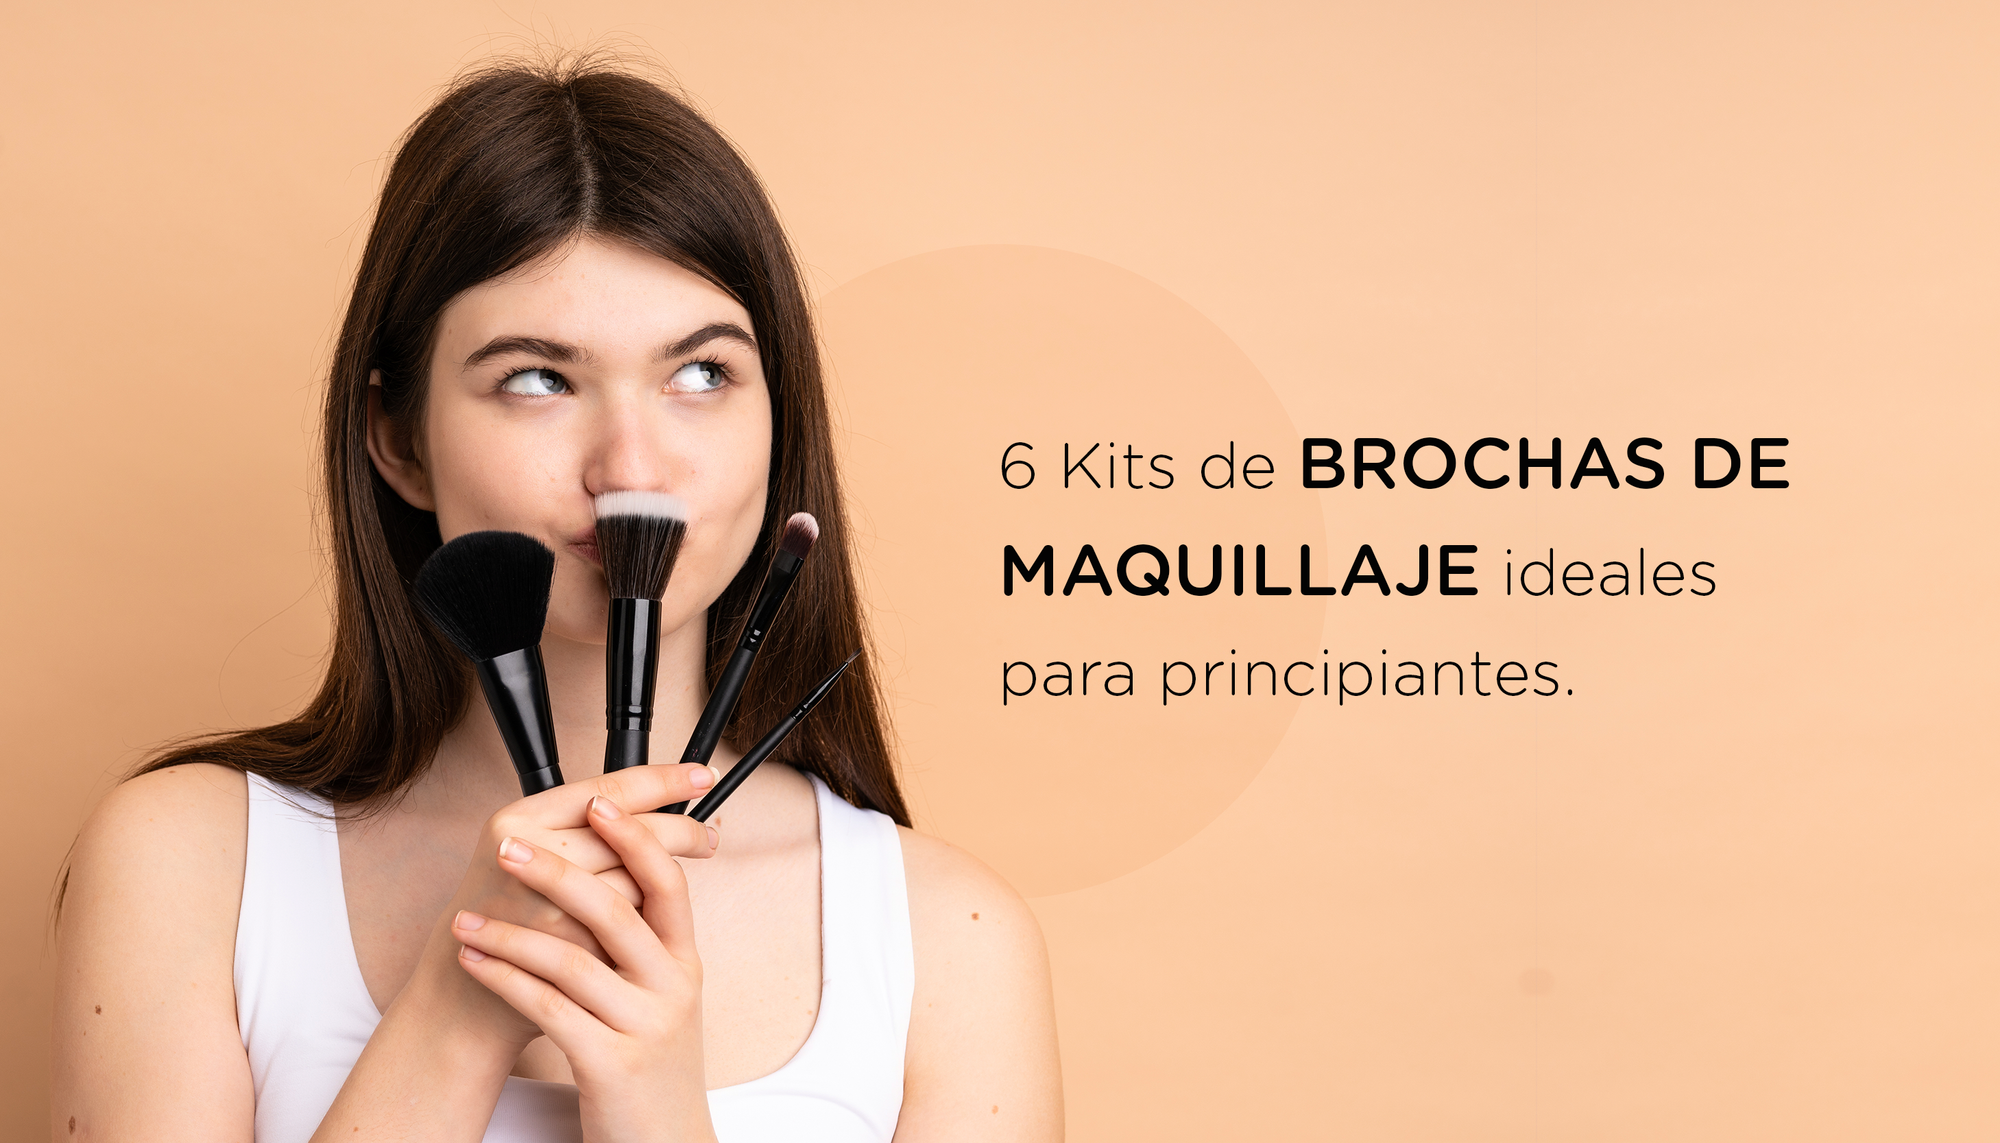 6 Kits de brochas de maquillaje ideales para principiantes